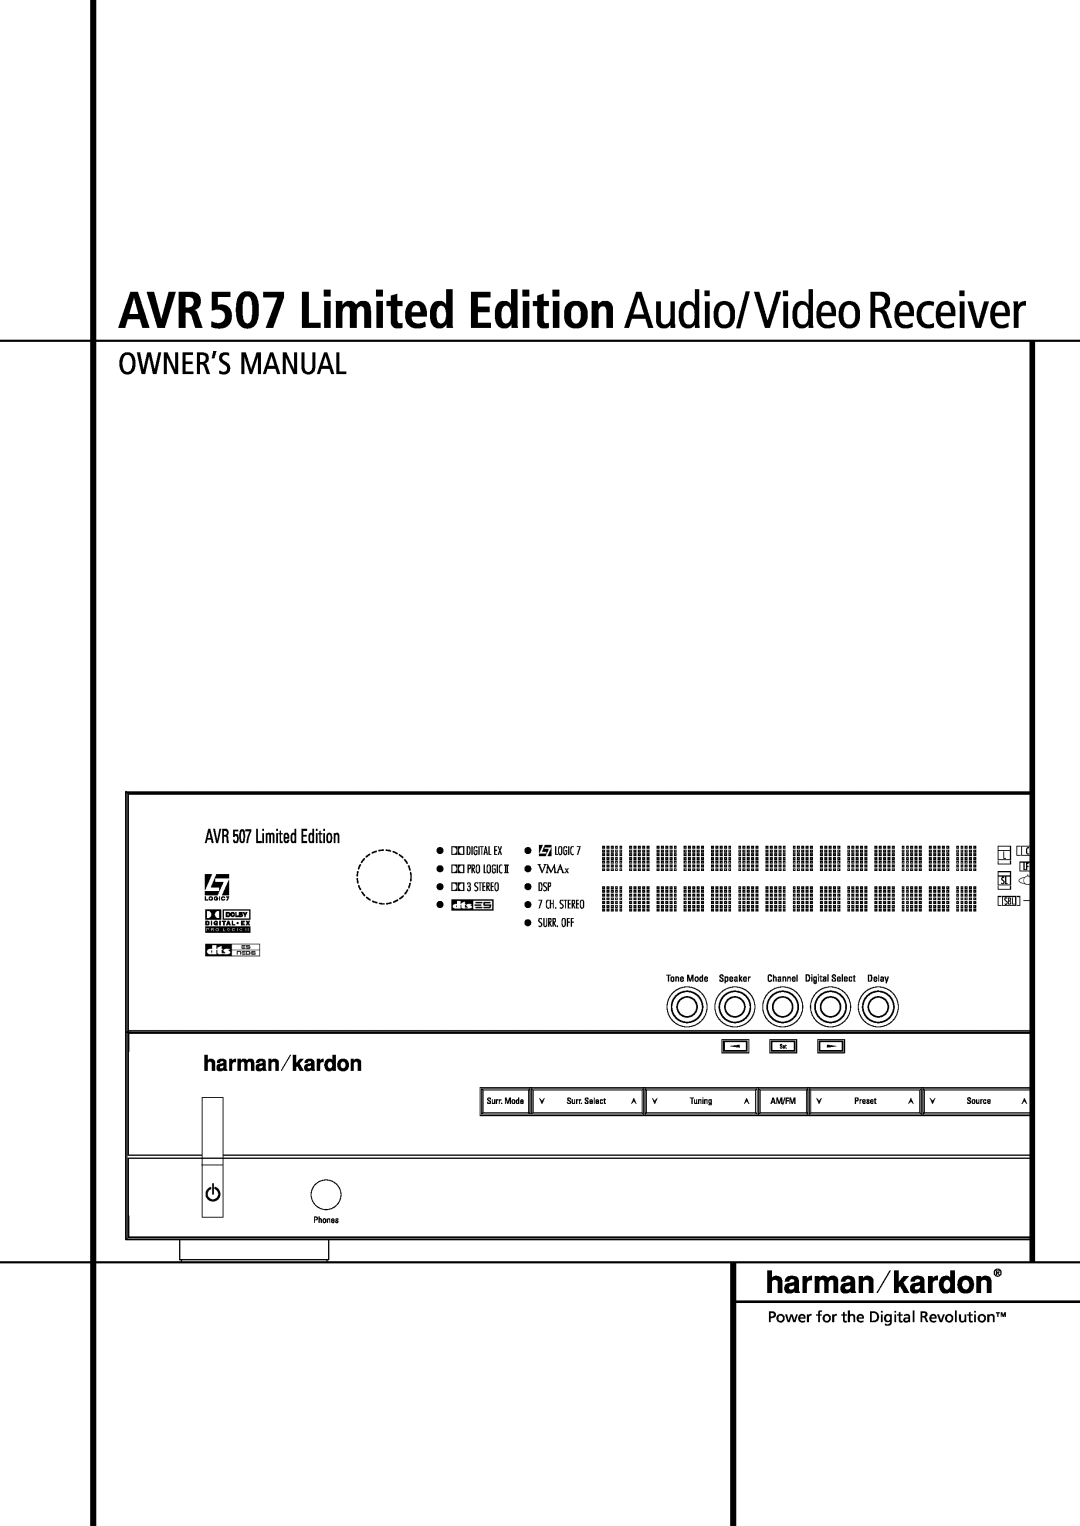 Harman-Kardon owner manual AVR507 Limited Edition Audio/Video Receiver 